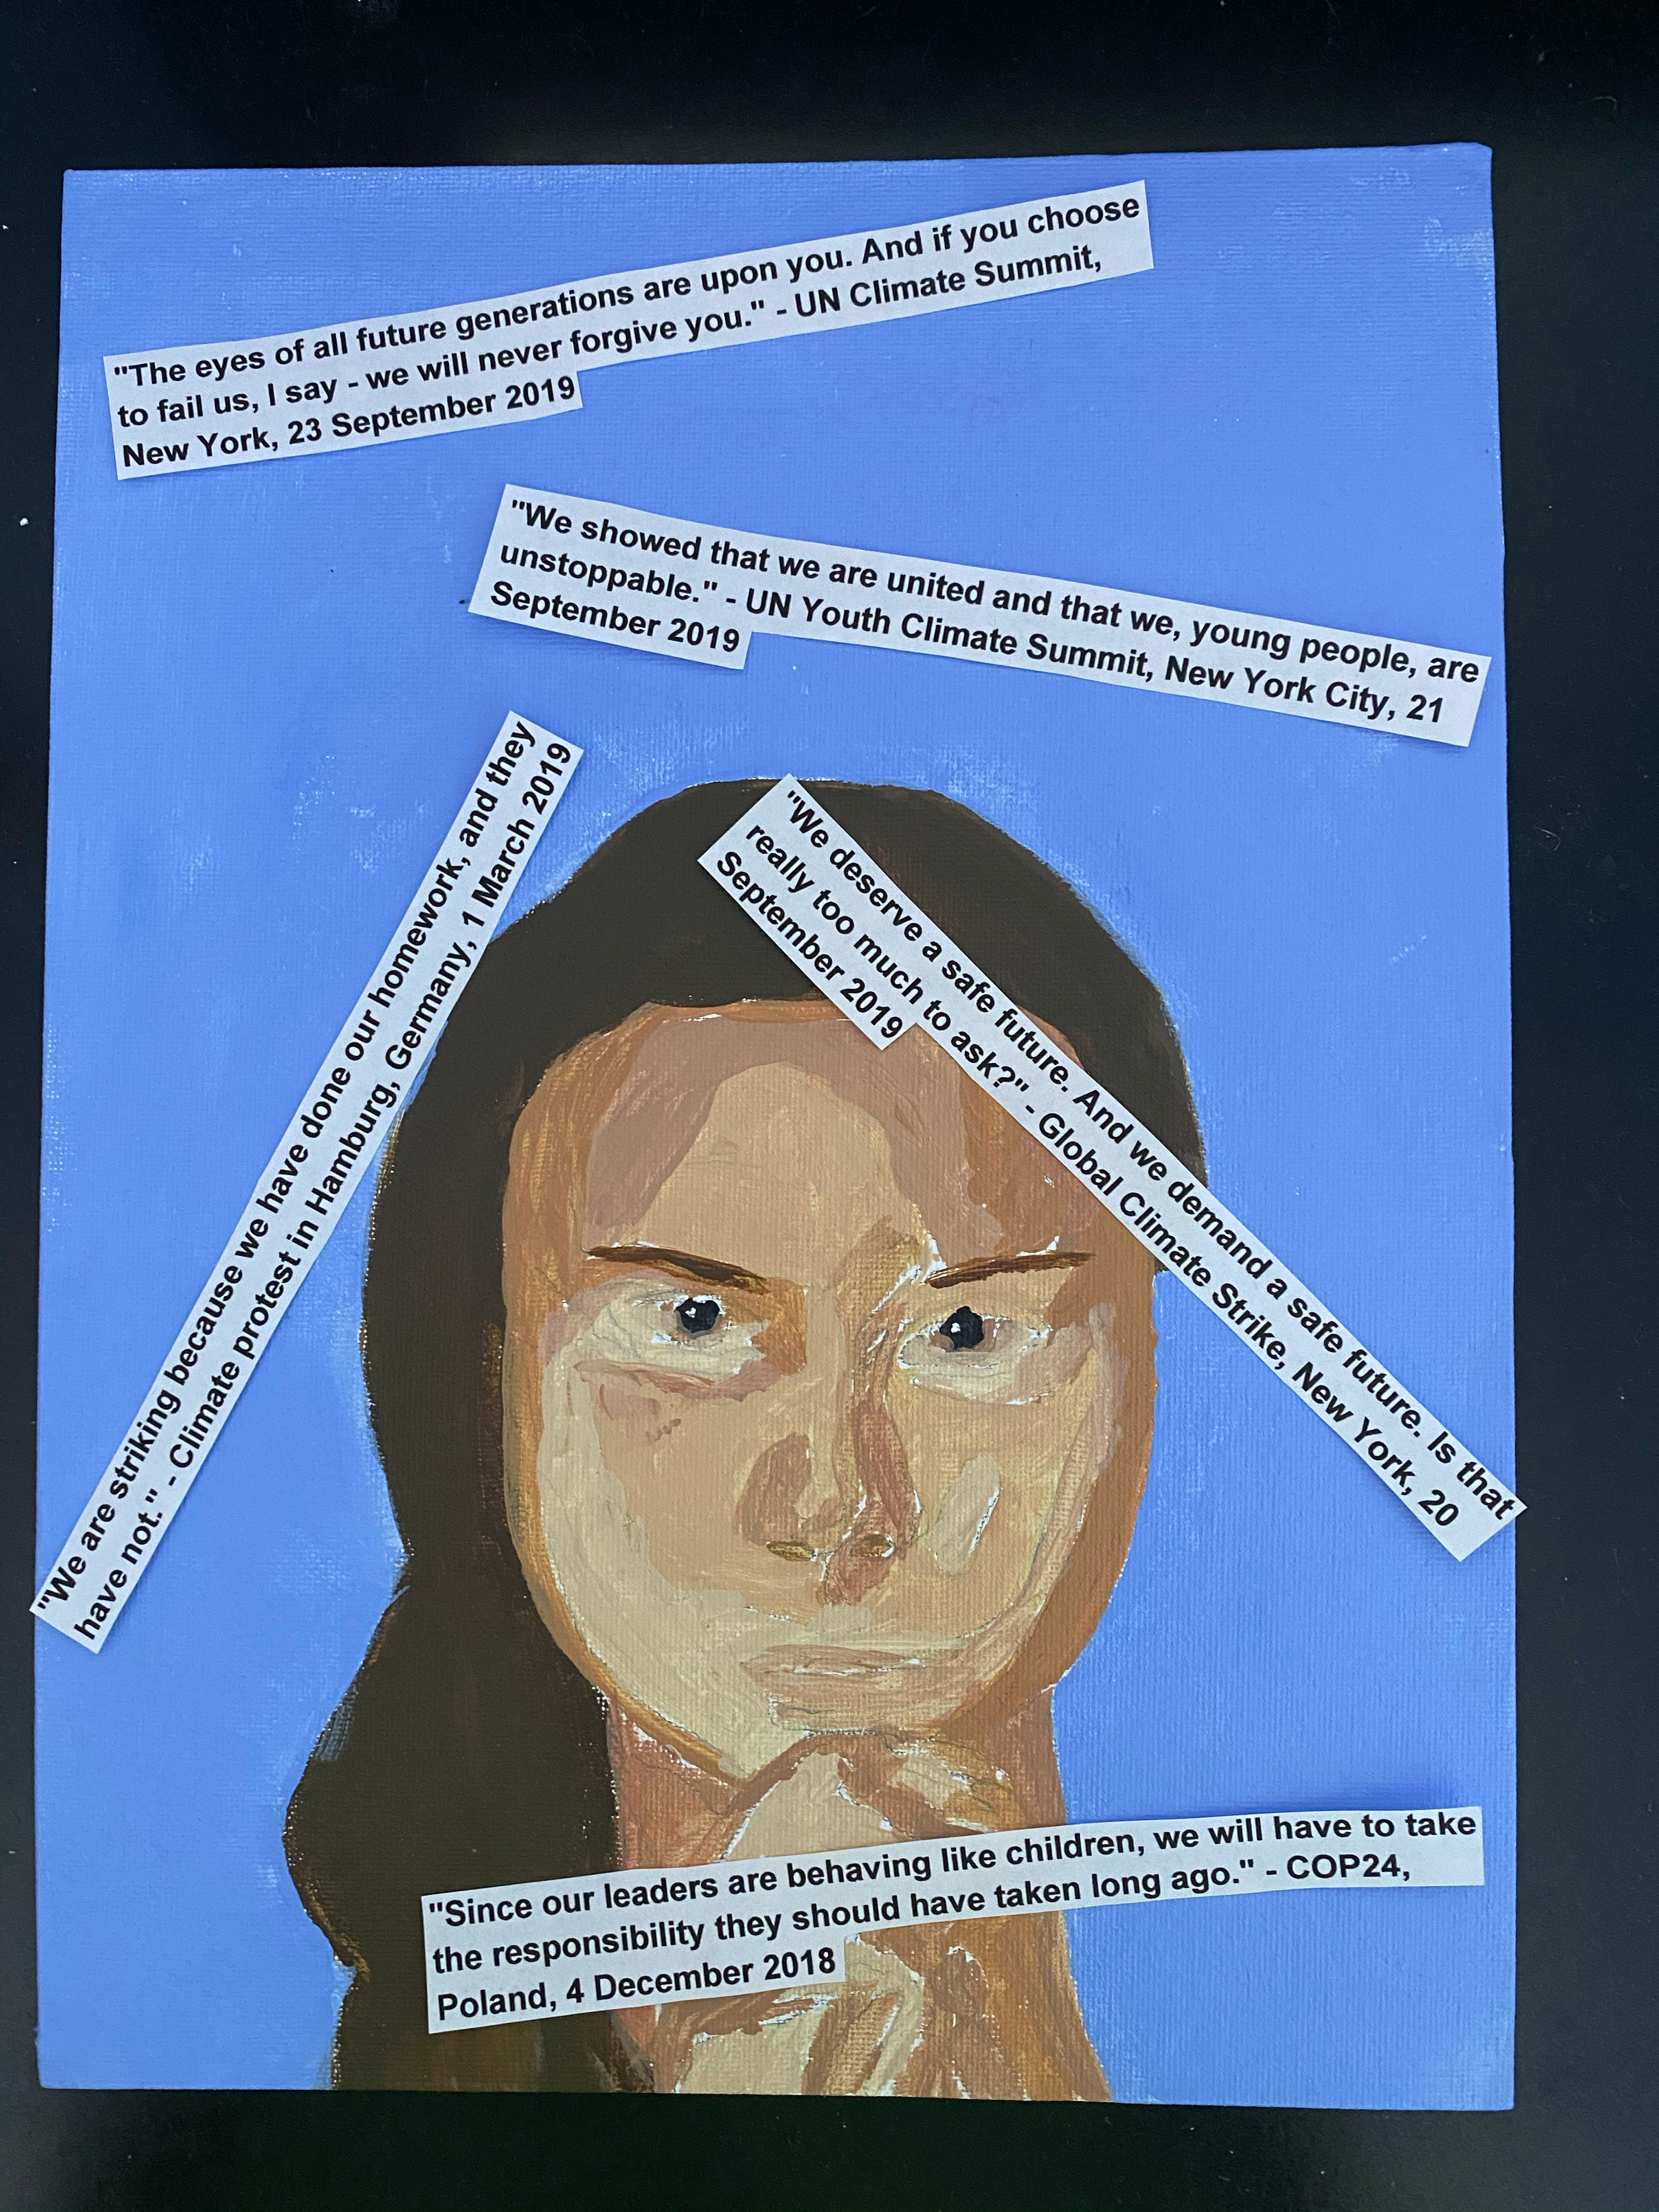 A portrait of Greta Thunberg against a blue background. 